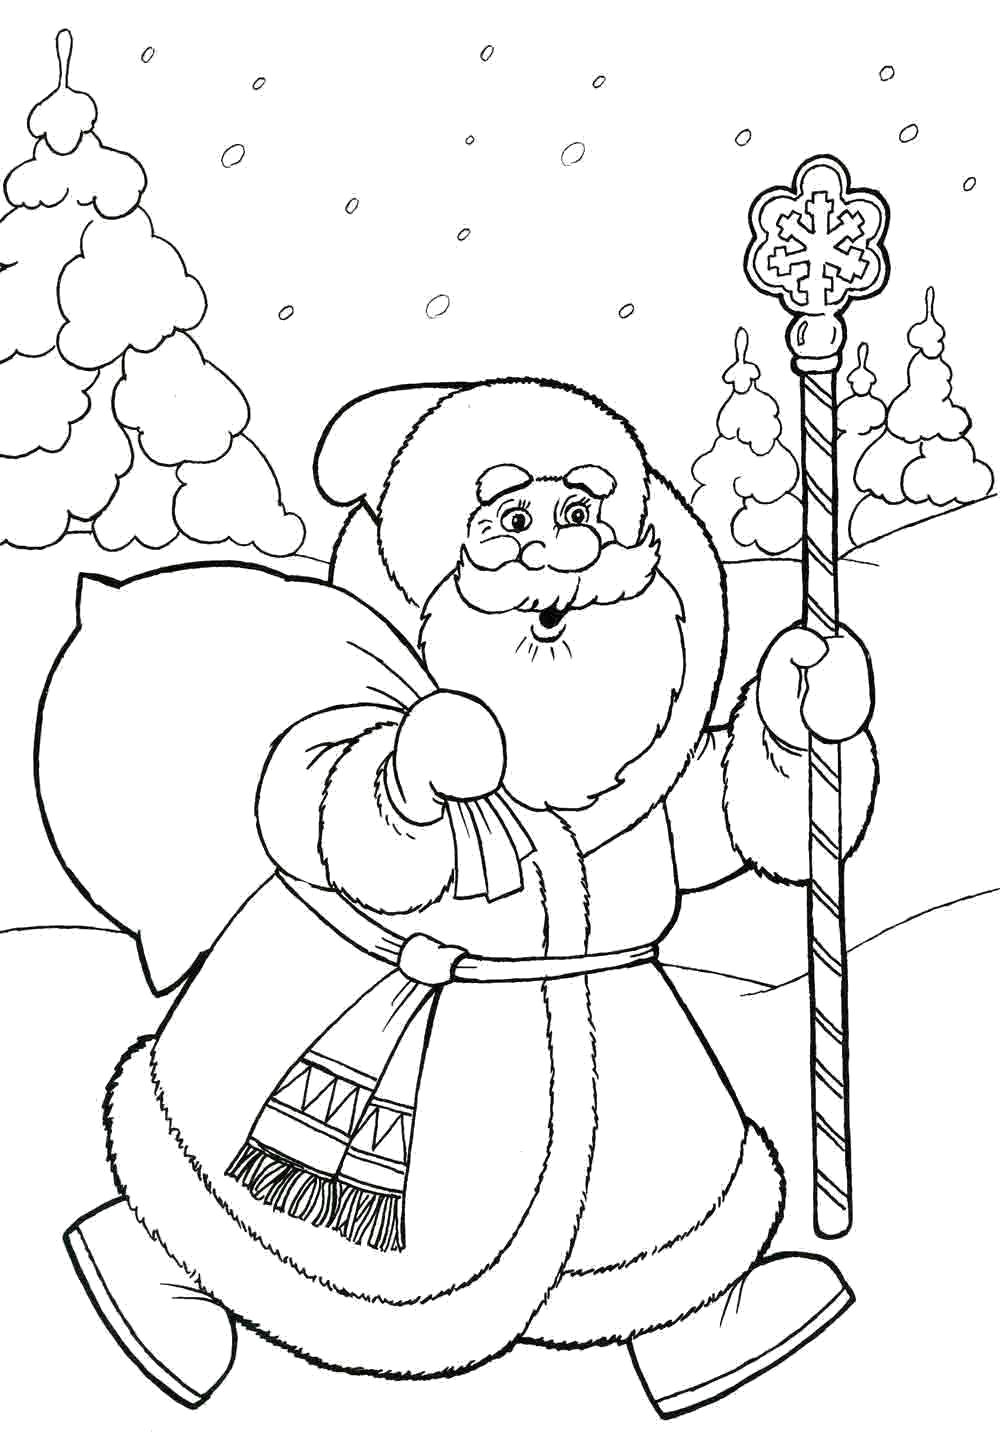 Название: Раскраска дед мороз идет по лесу. Категория: Дед мороз. Теги: дед мороз с подарками.